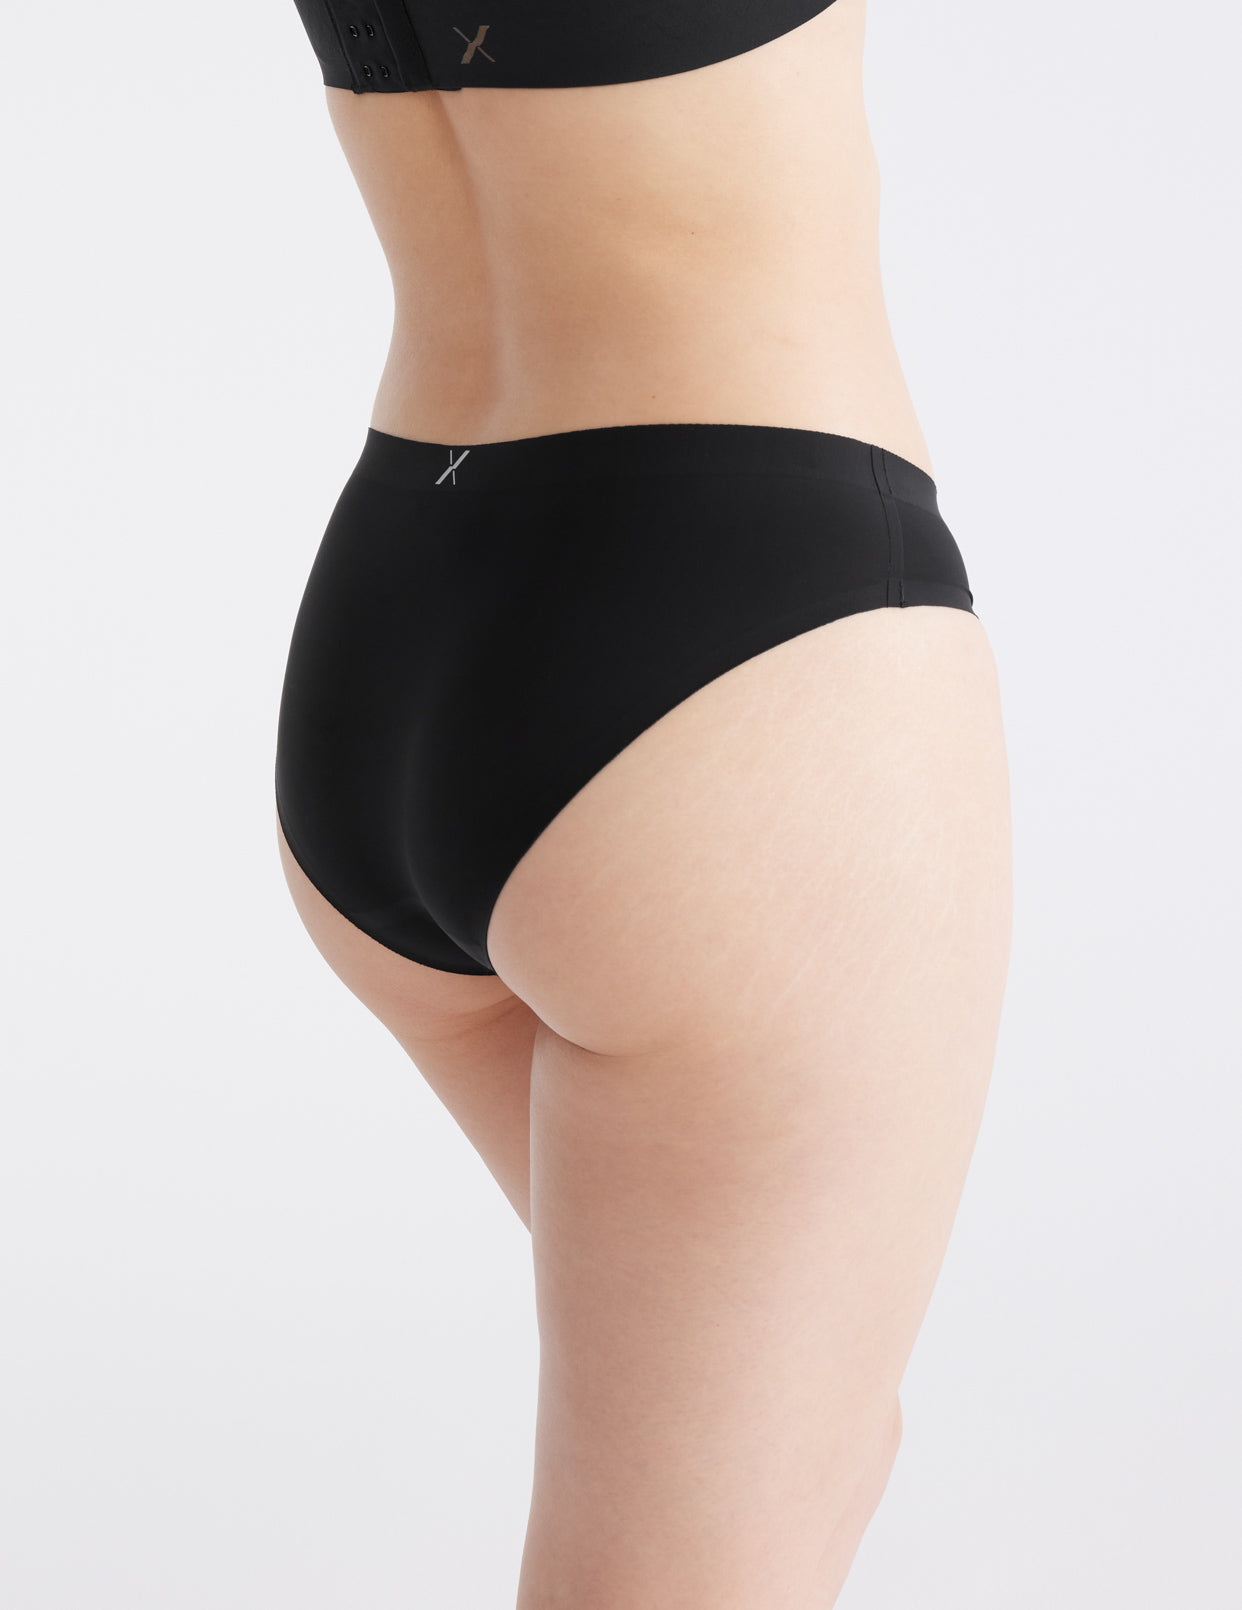 Buy By The Period Company The Bikini Leak-Proof Period Underwear for Women,  L Black at